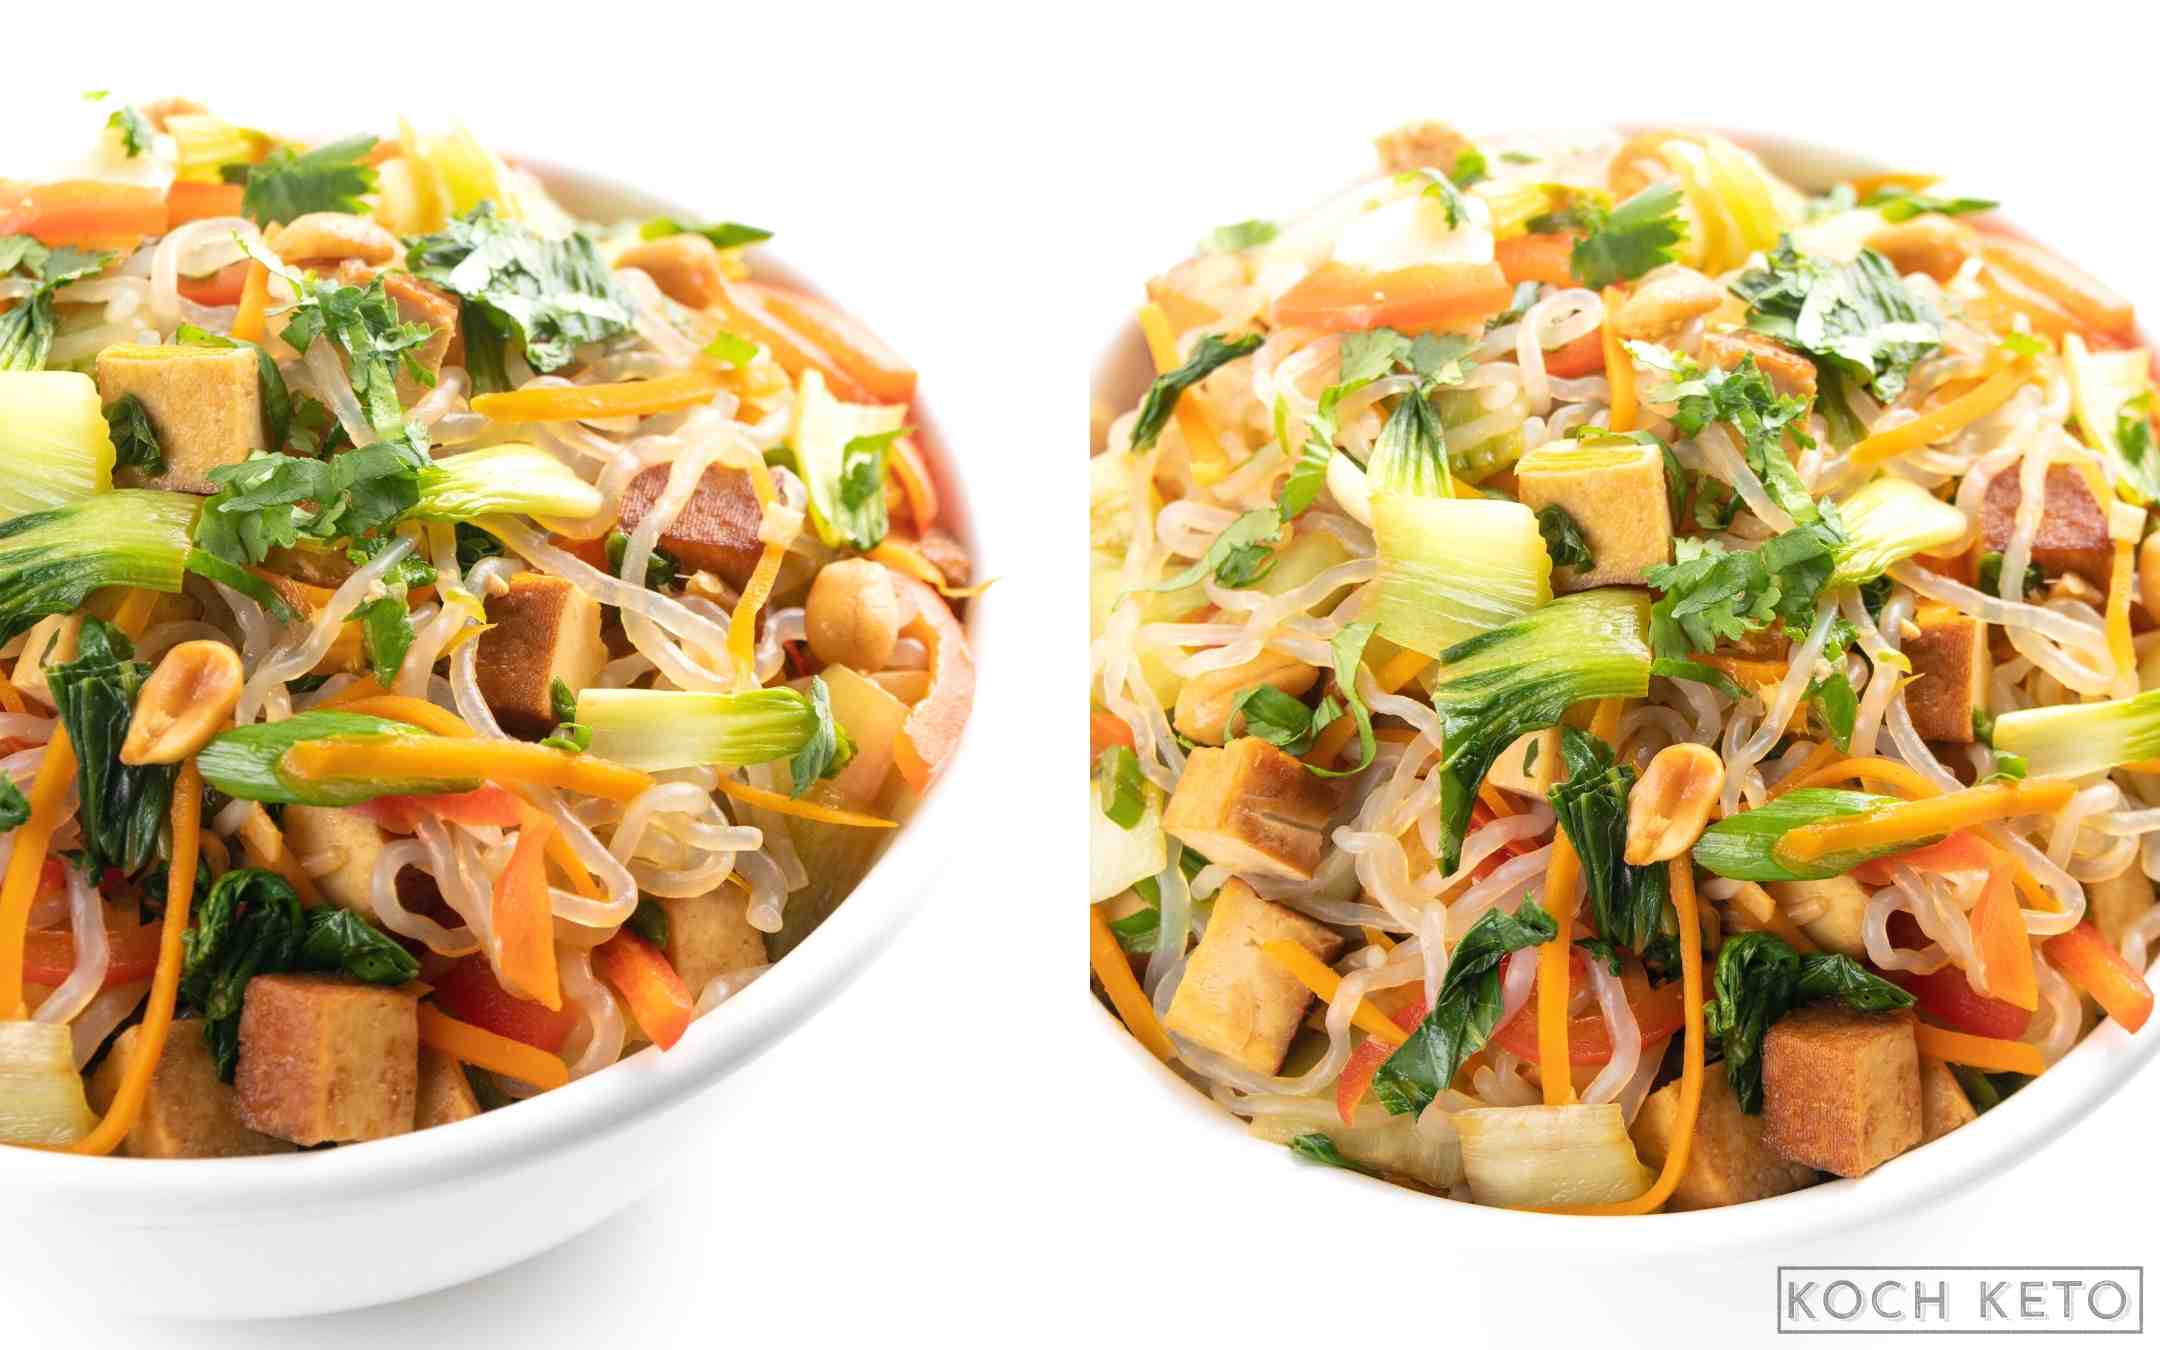 Mega leckerer Low Carb Glasnudelsalat mit Tofu zum veganen Abendessen ohne Kohlenhydrate Desktop Image Collage